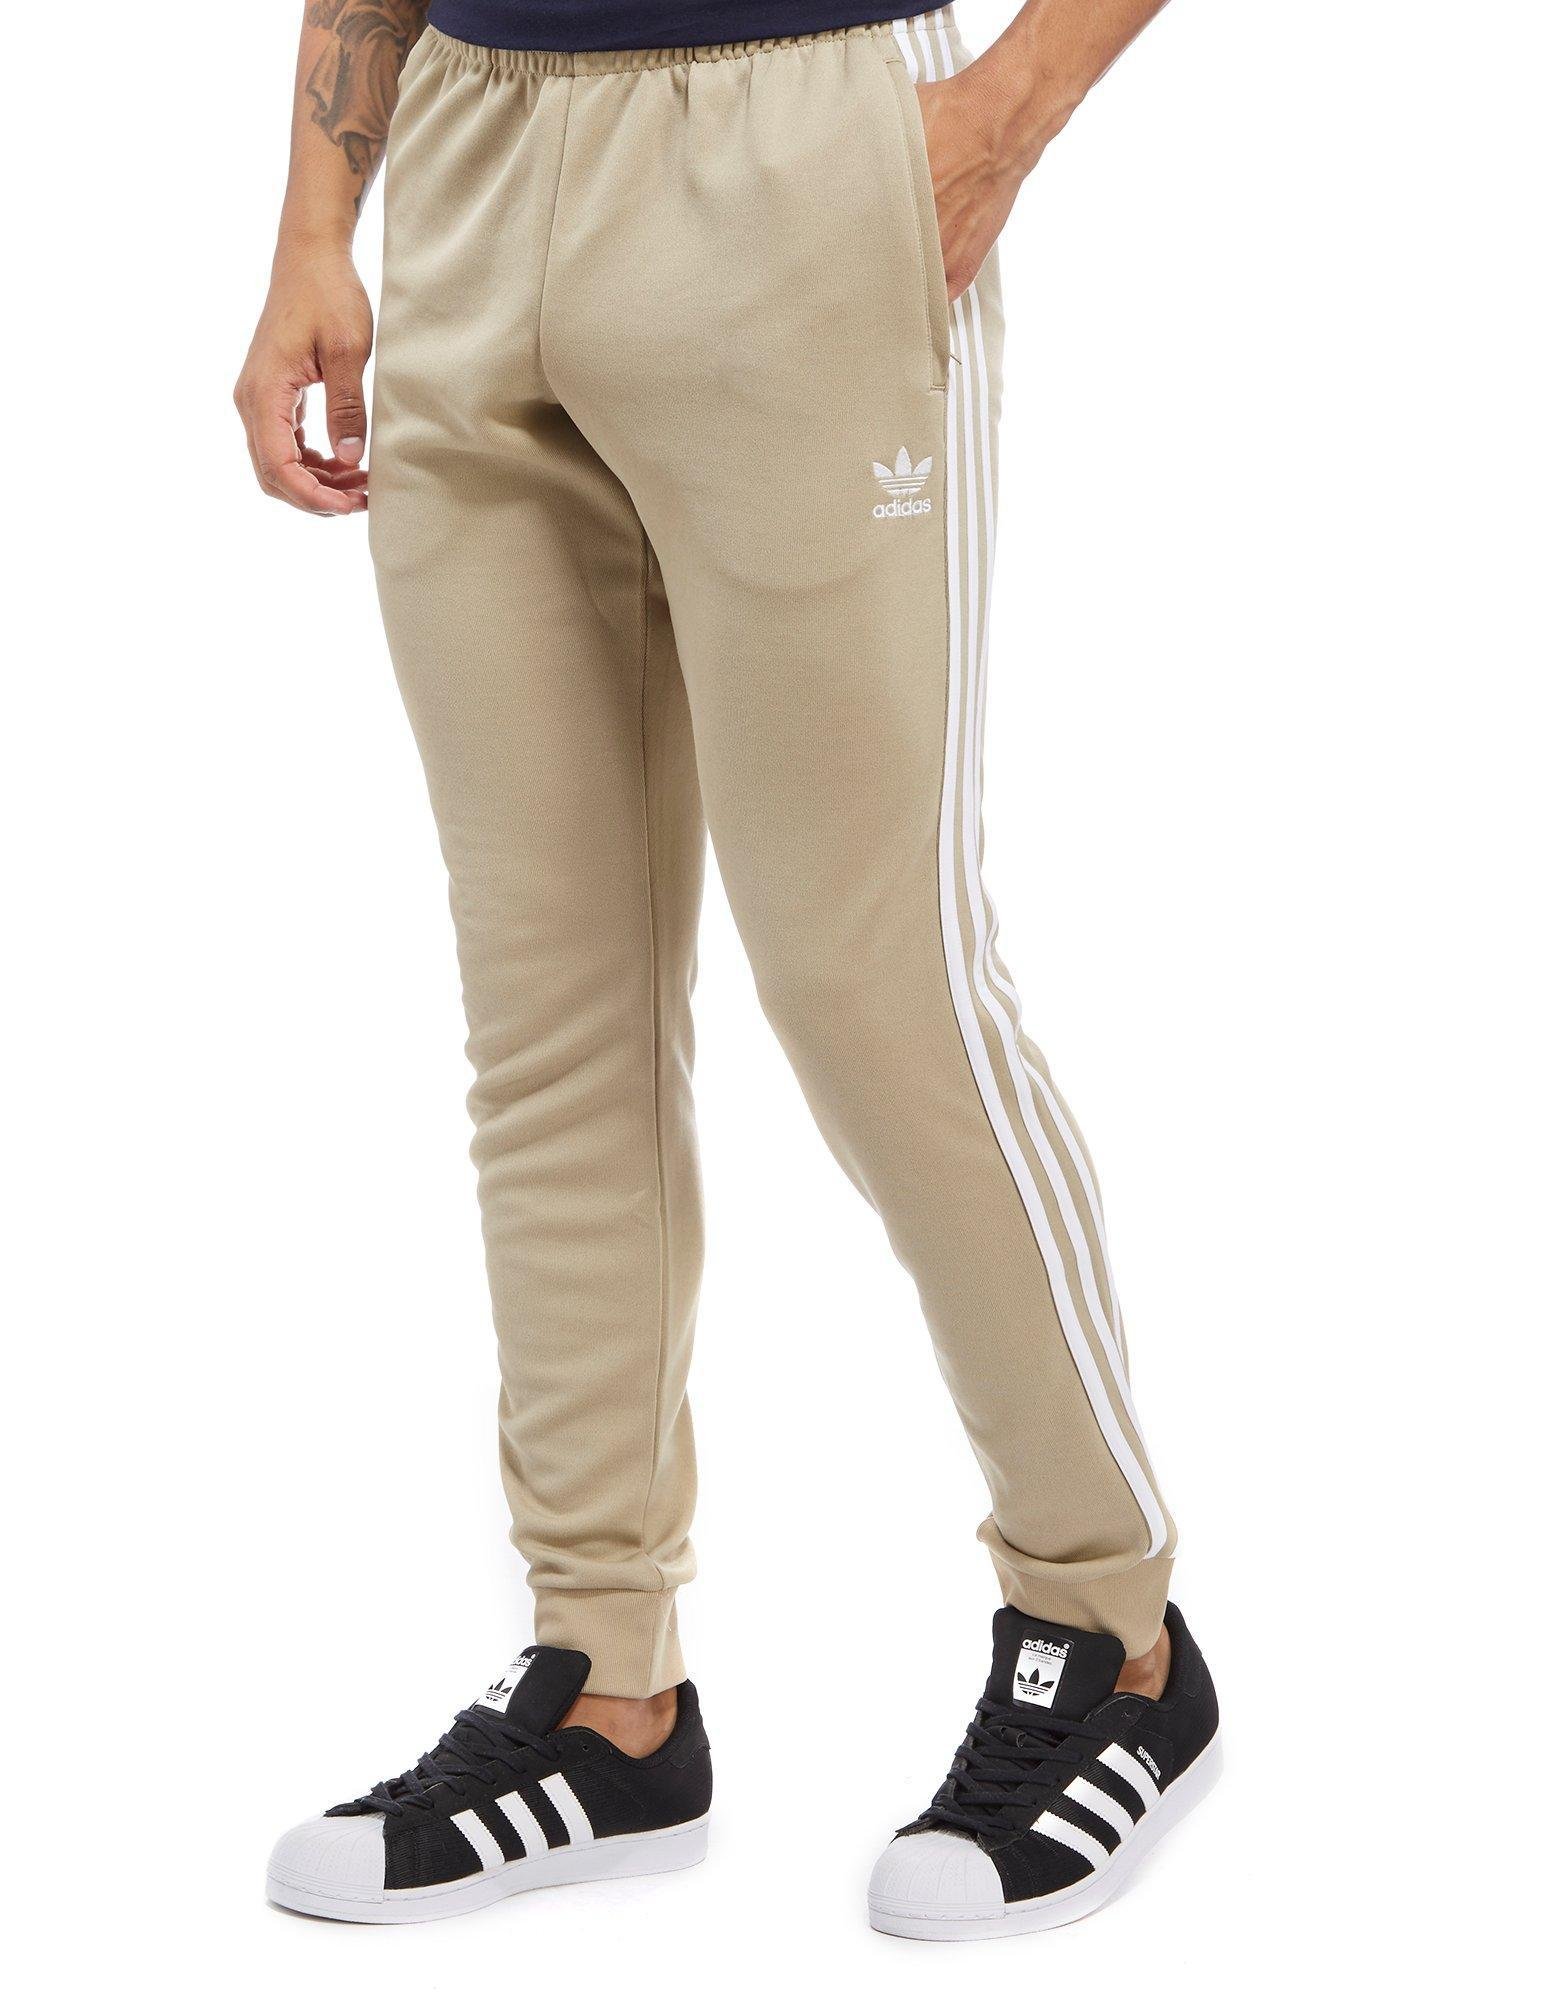 adidas track pants khaki